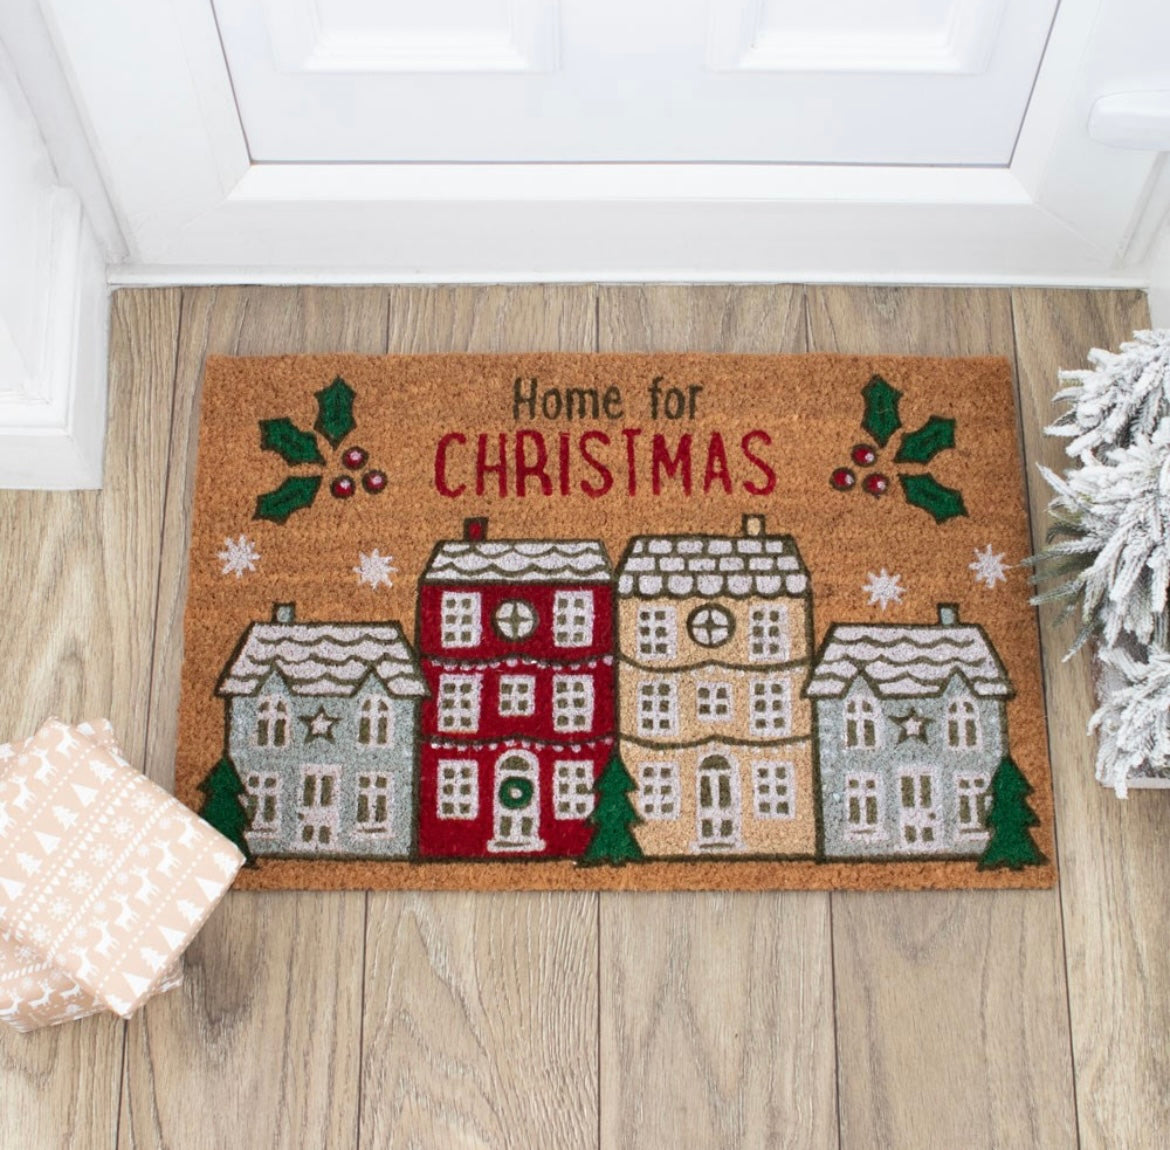 Home for Christmas doormat